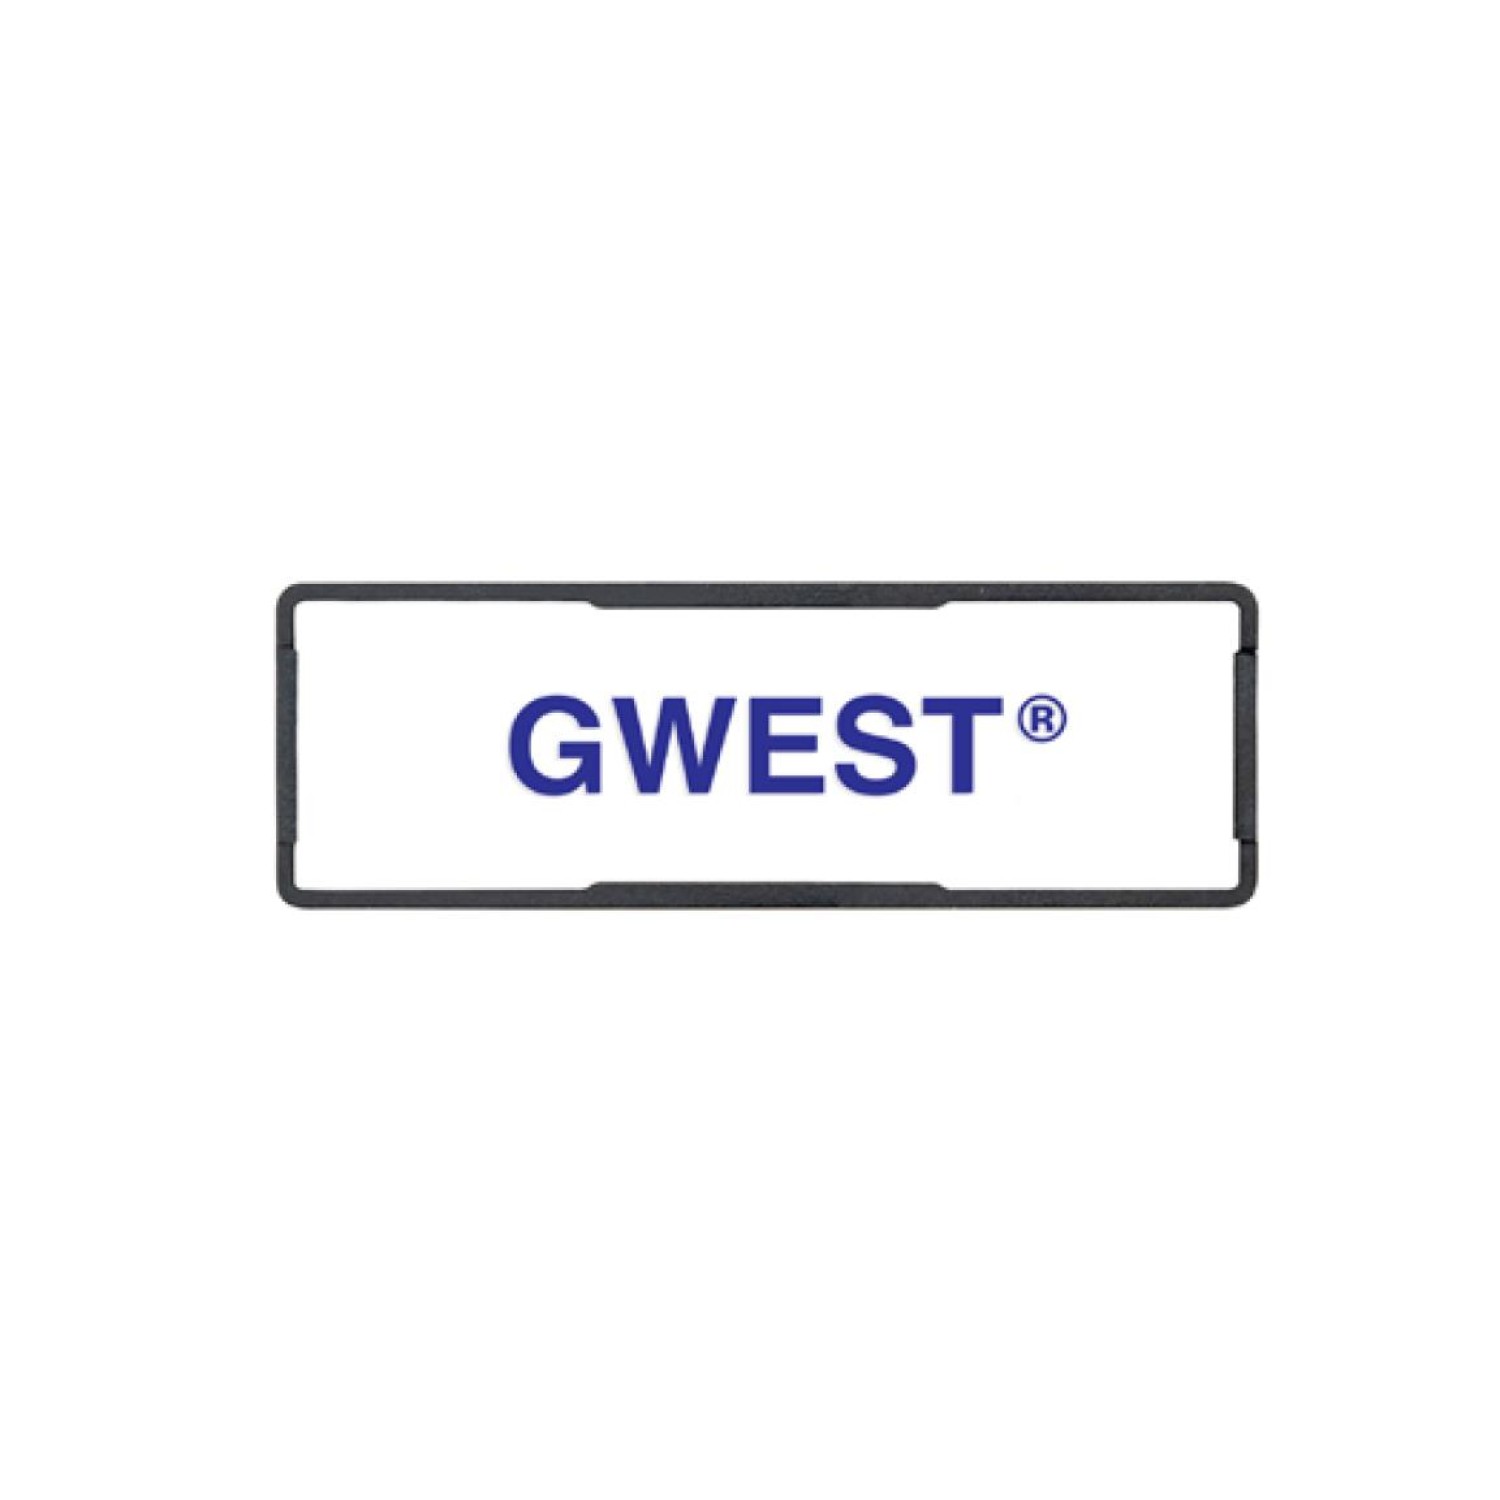 Gwest Pano Etiketi - GPET 3 - 50 Adet